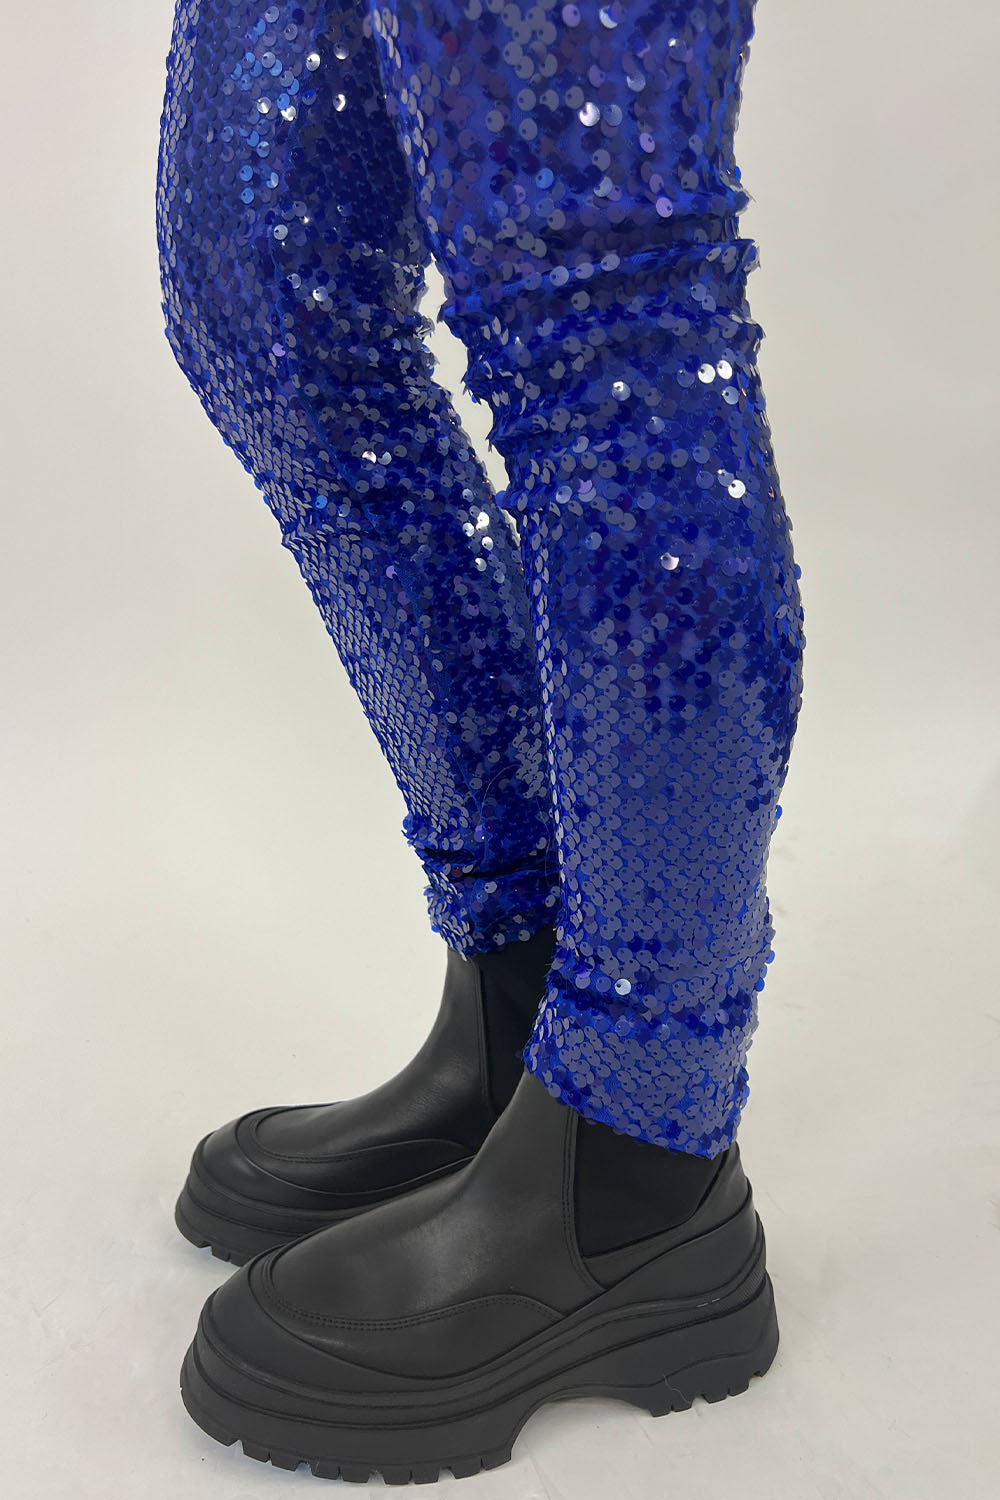 Ottod'ame - Sequin Leggings: Blue